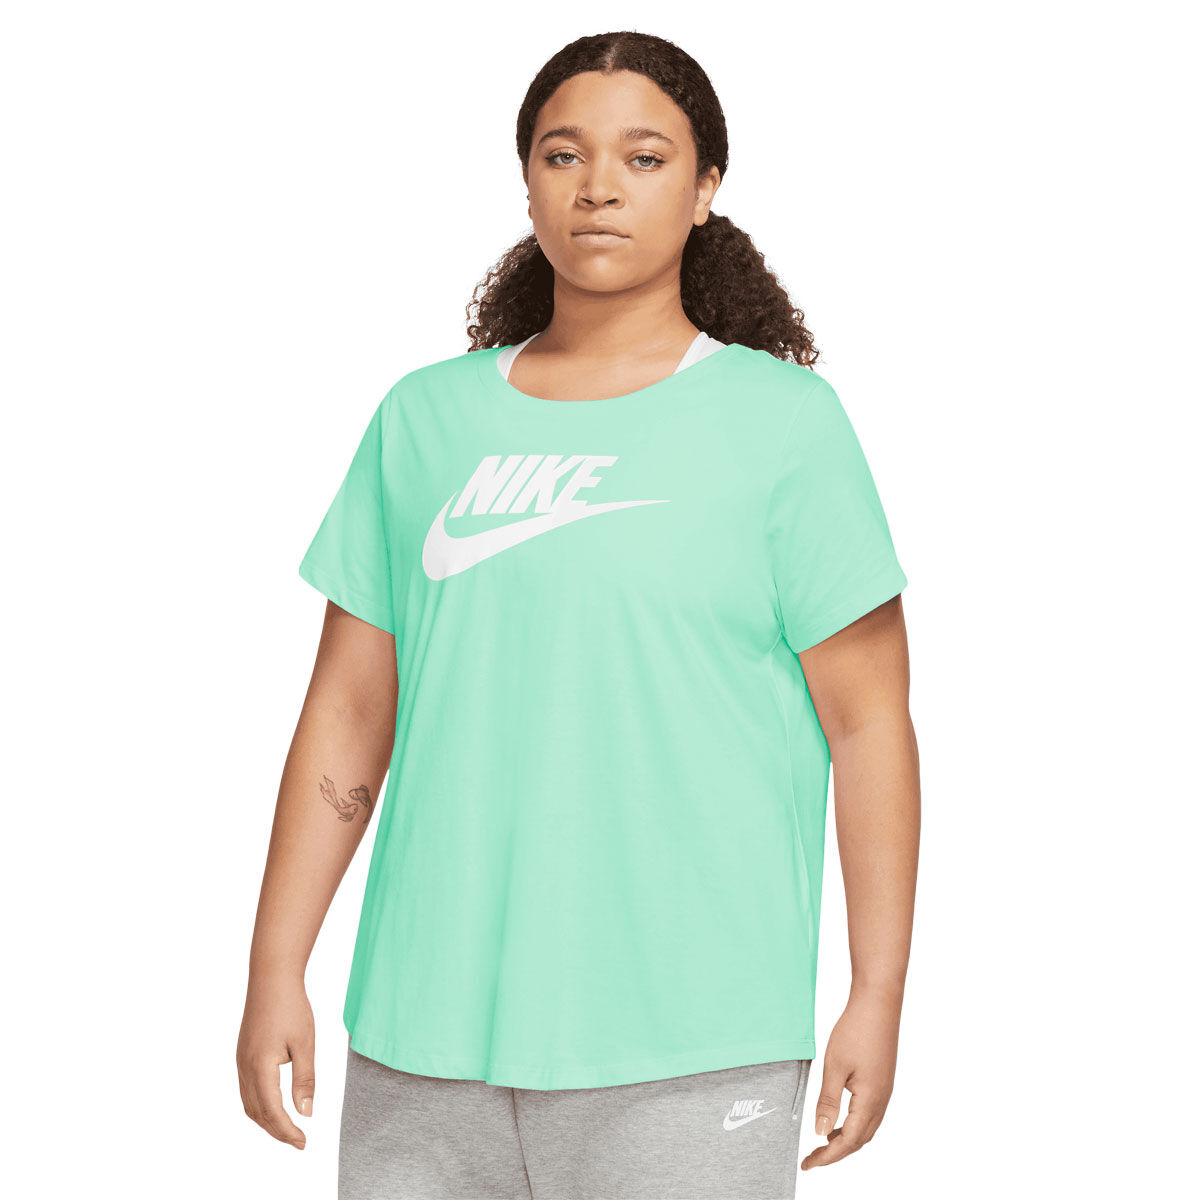 WOMEN FASHION Shirts & T-shirts Blouse Glitter discount 42% PAN blouse Green M 